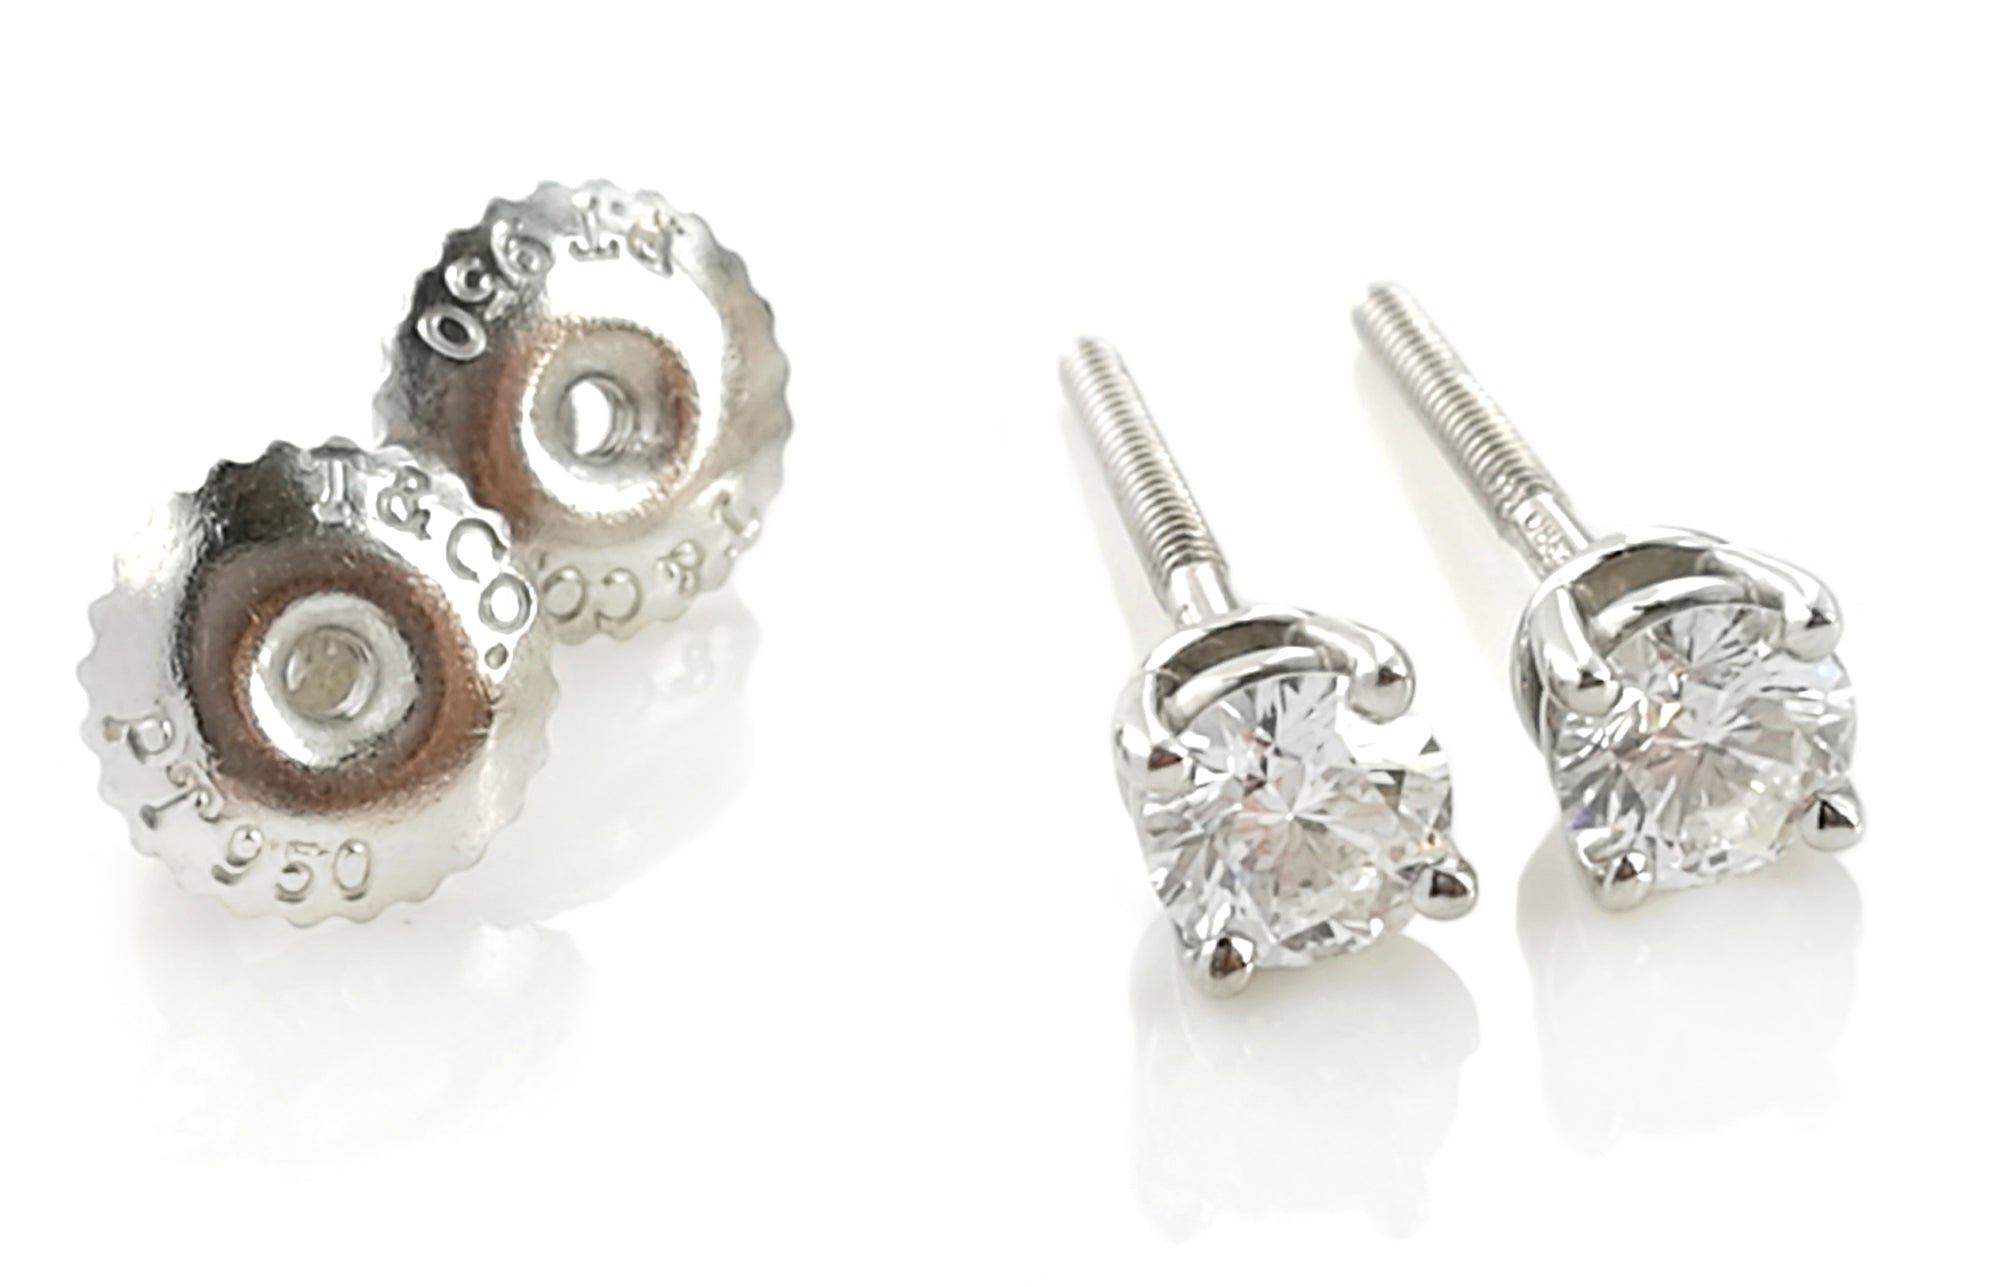 Tiffany & Co. 0.42ct Diamond Earrings in Platinum